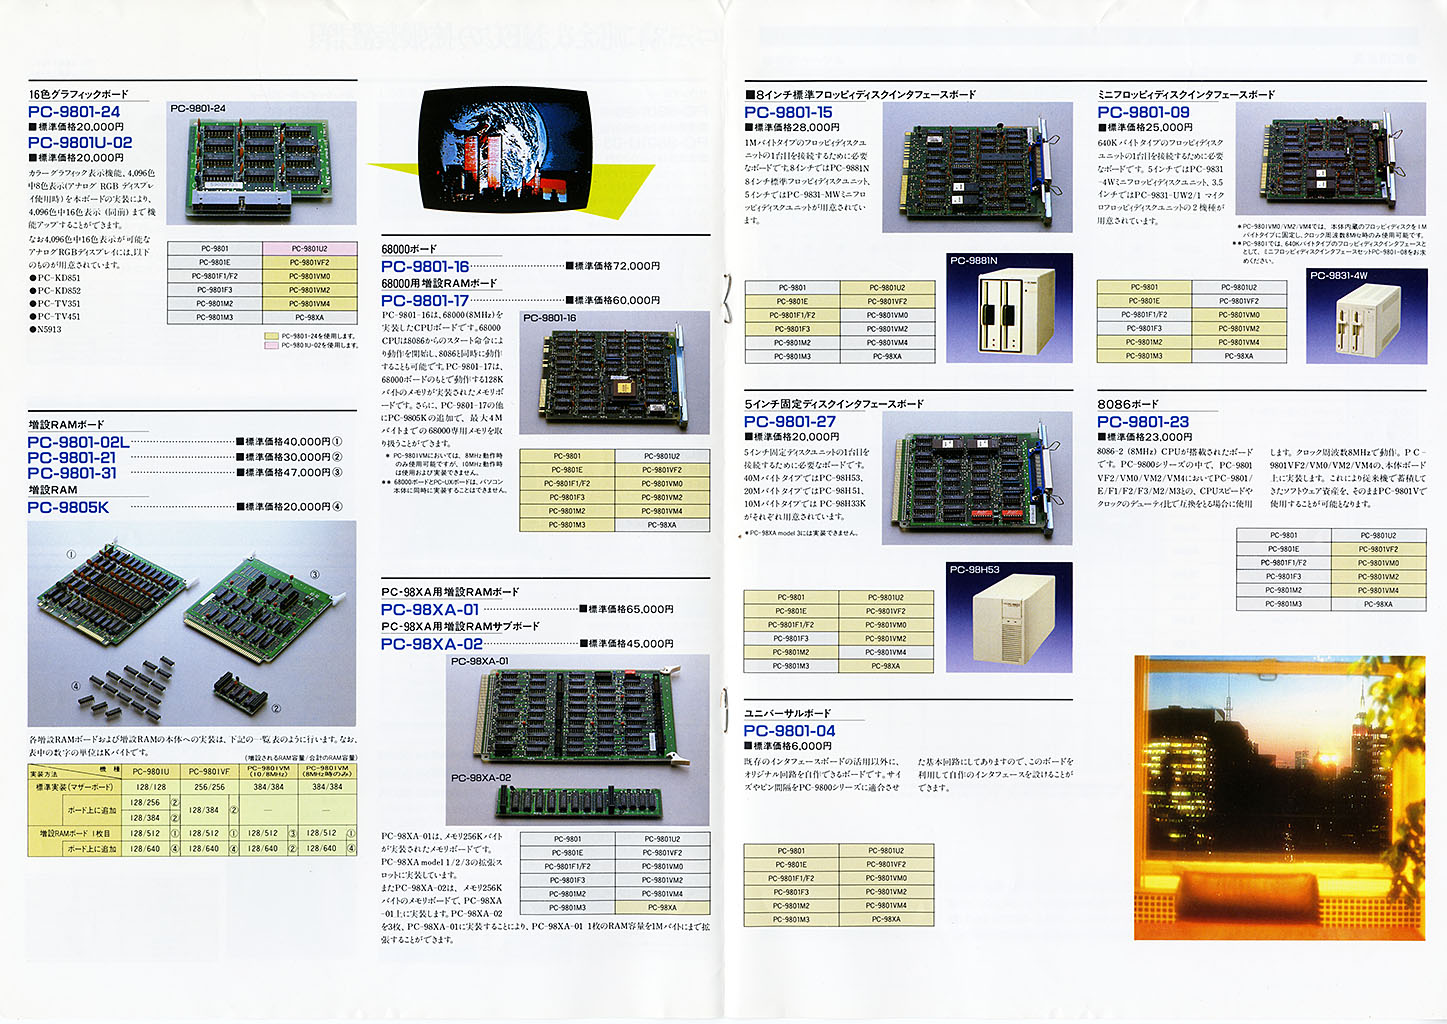 ratscats web page/NEC-PC-9800シリーズ拡張装置